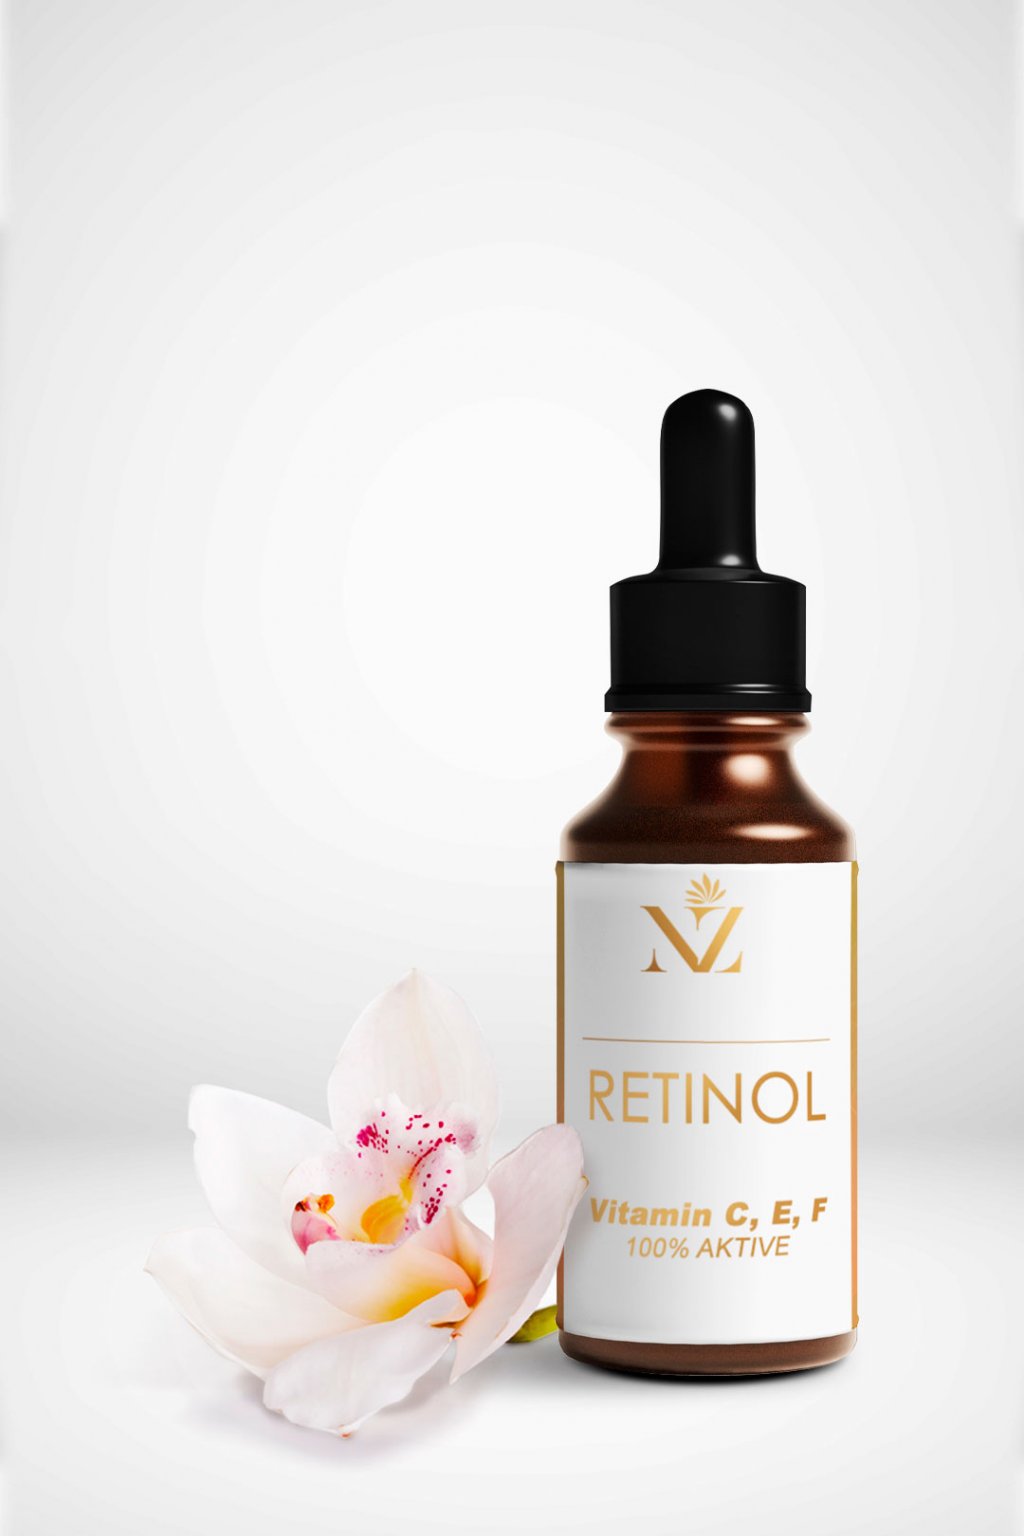 Retinol sérum s vitamíny C, E, F 30 ml